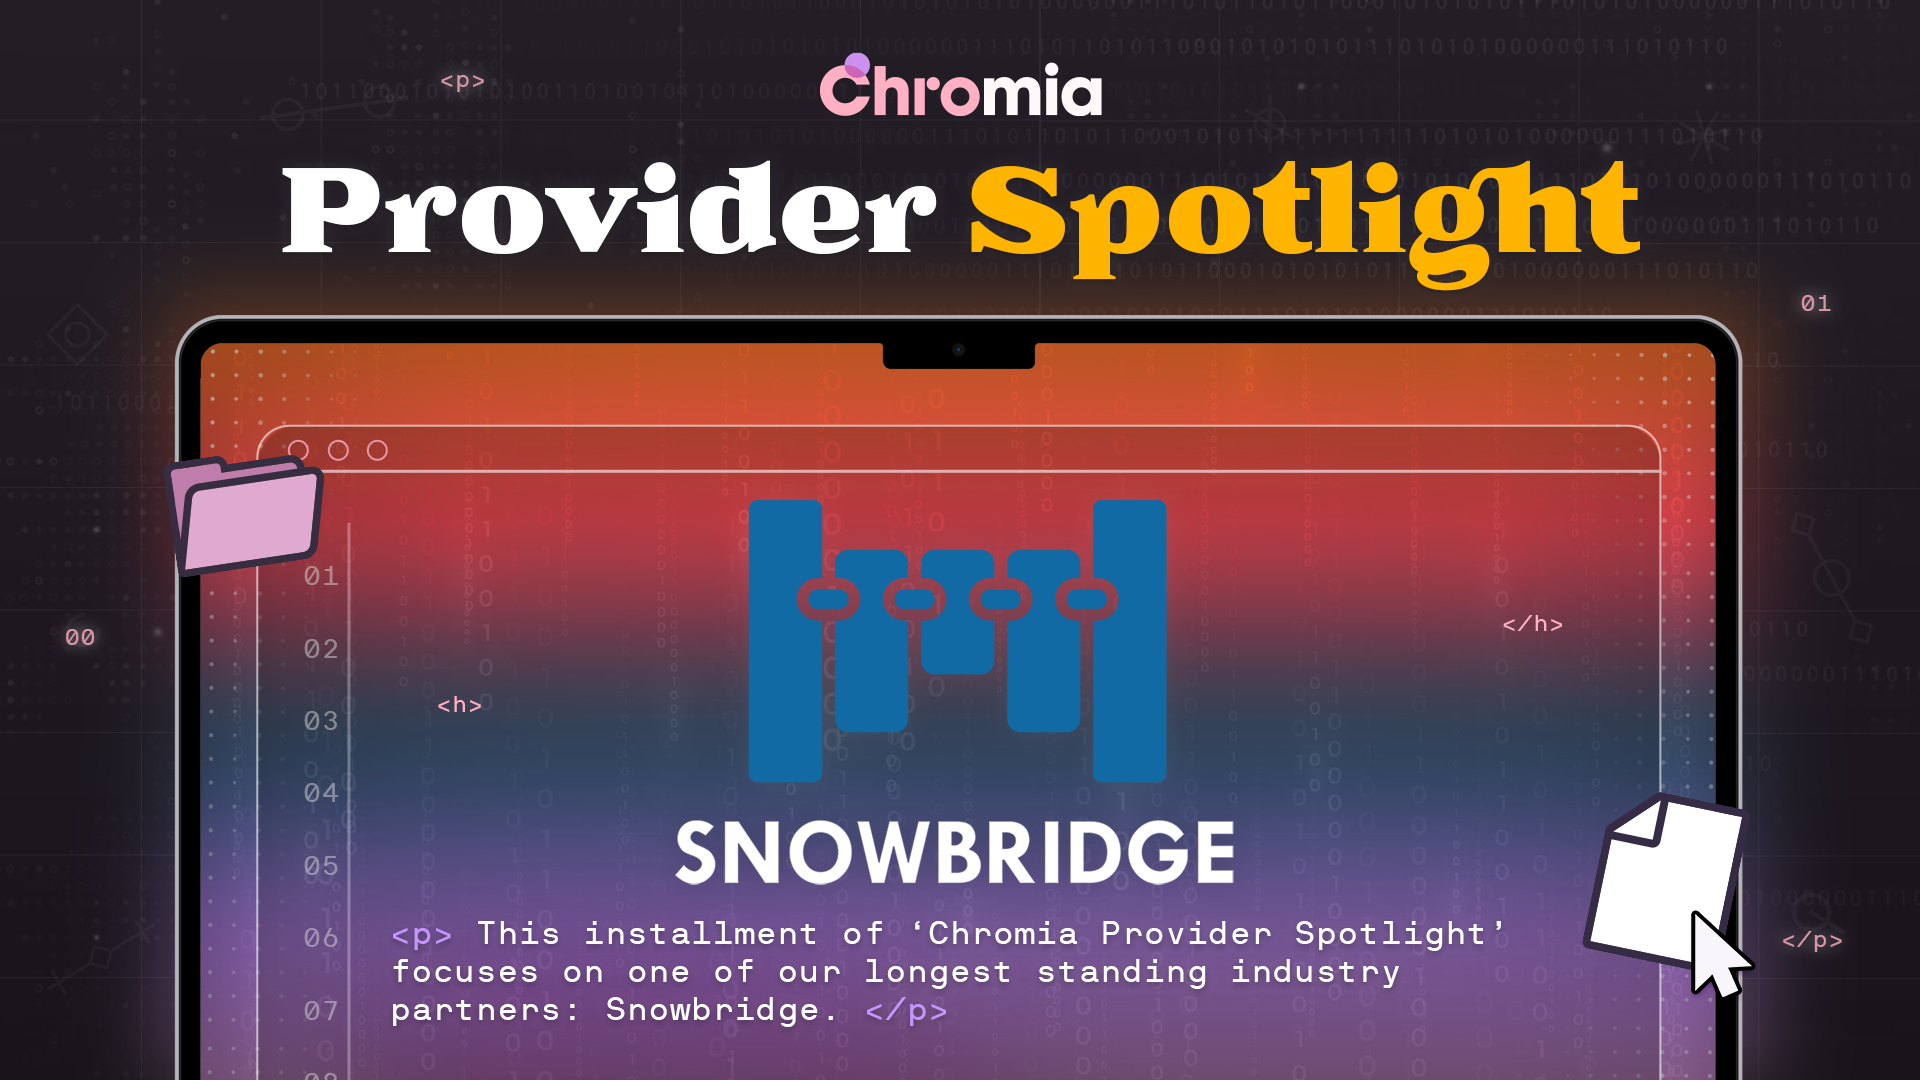 Chromia Provider Spotlight: Snowbridge